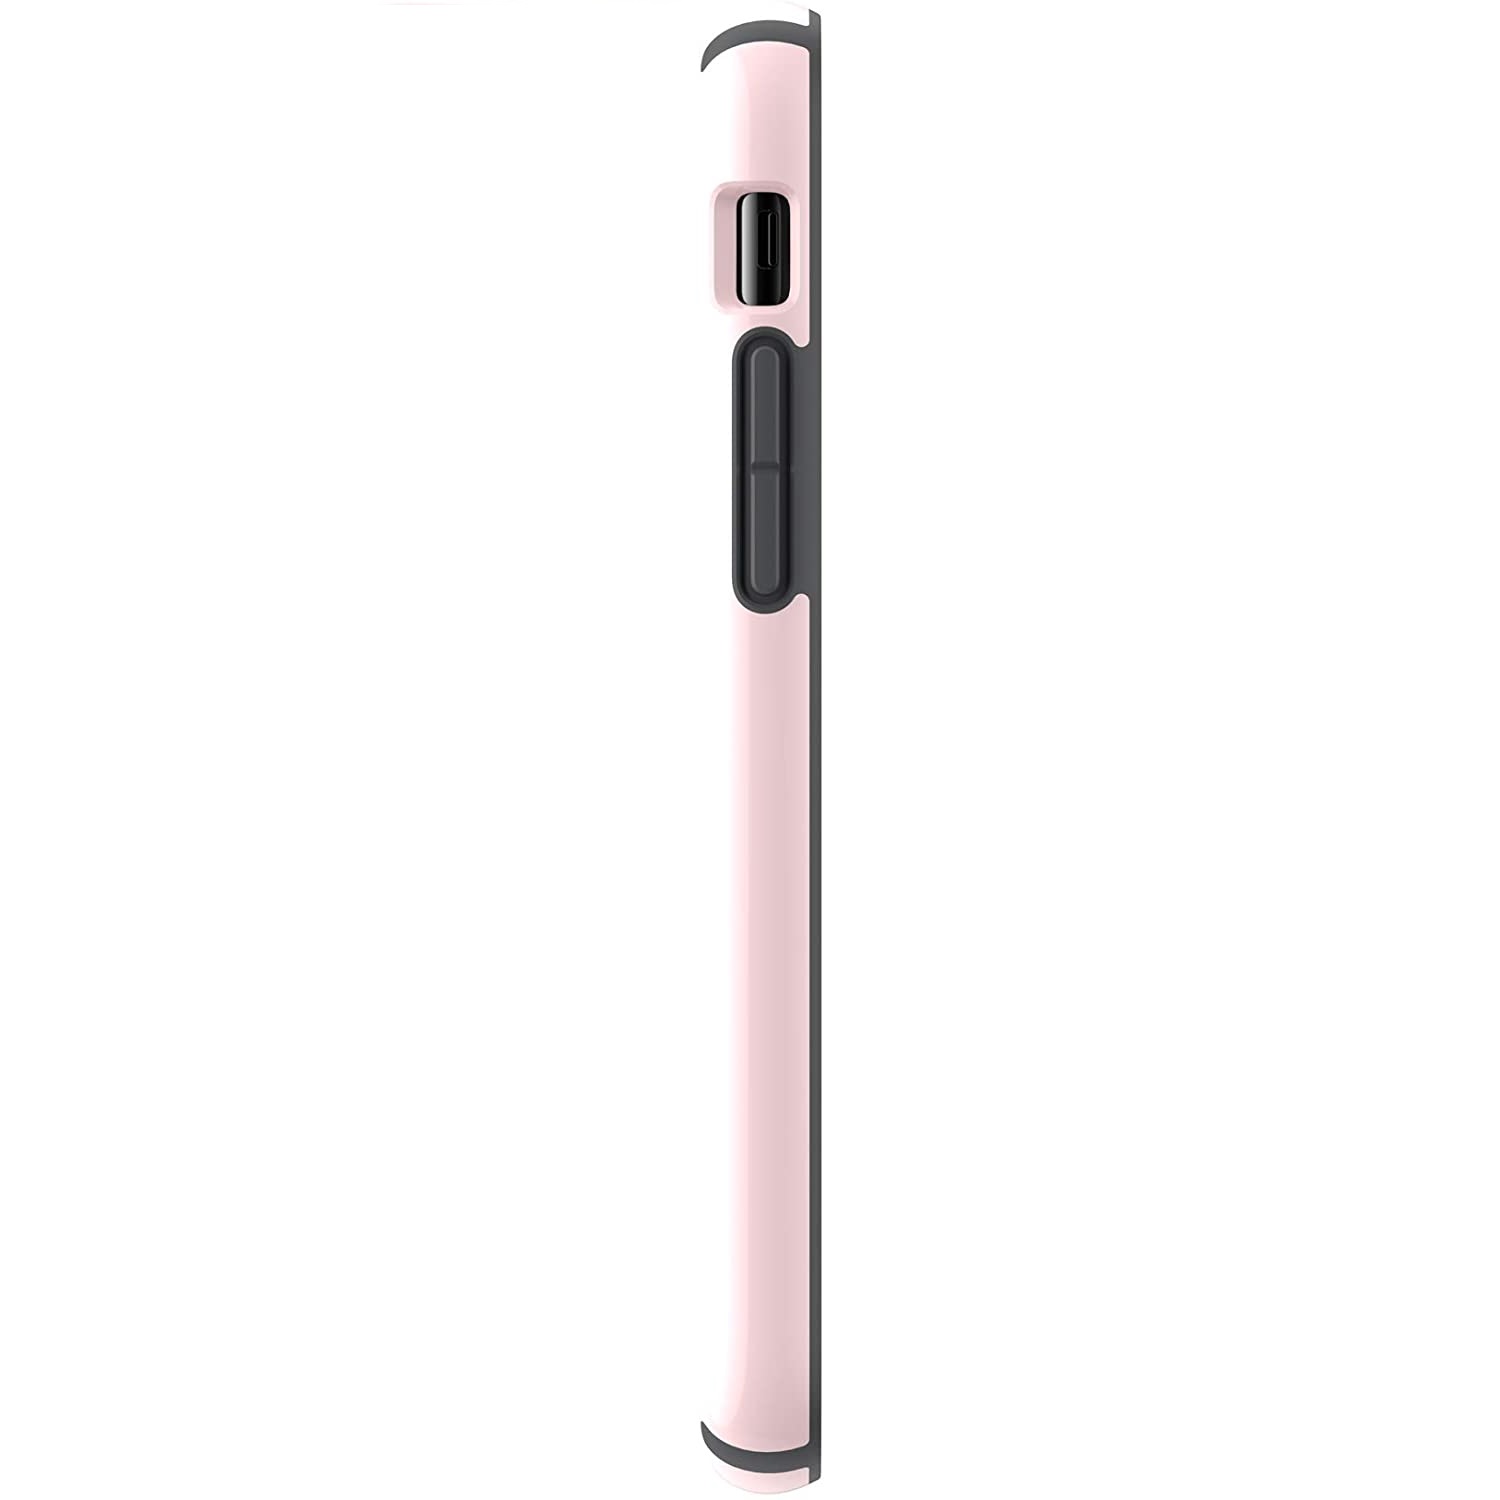 Speck CandyShell Grip Case for iPhone 11 Pro - Quartz Pink/Slate Grey ...